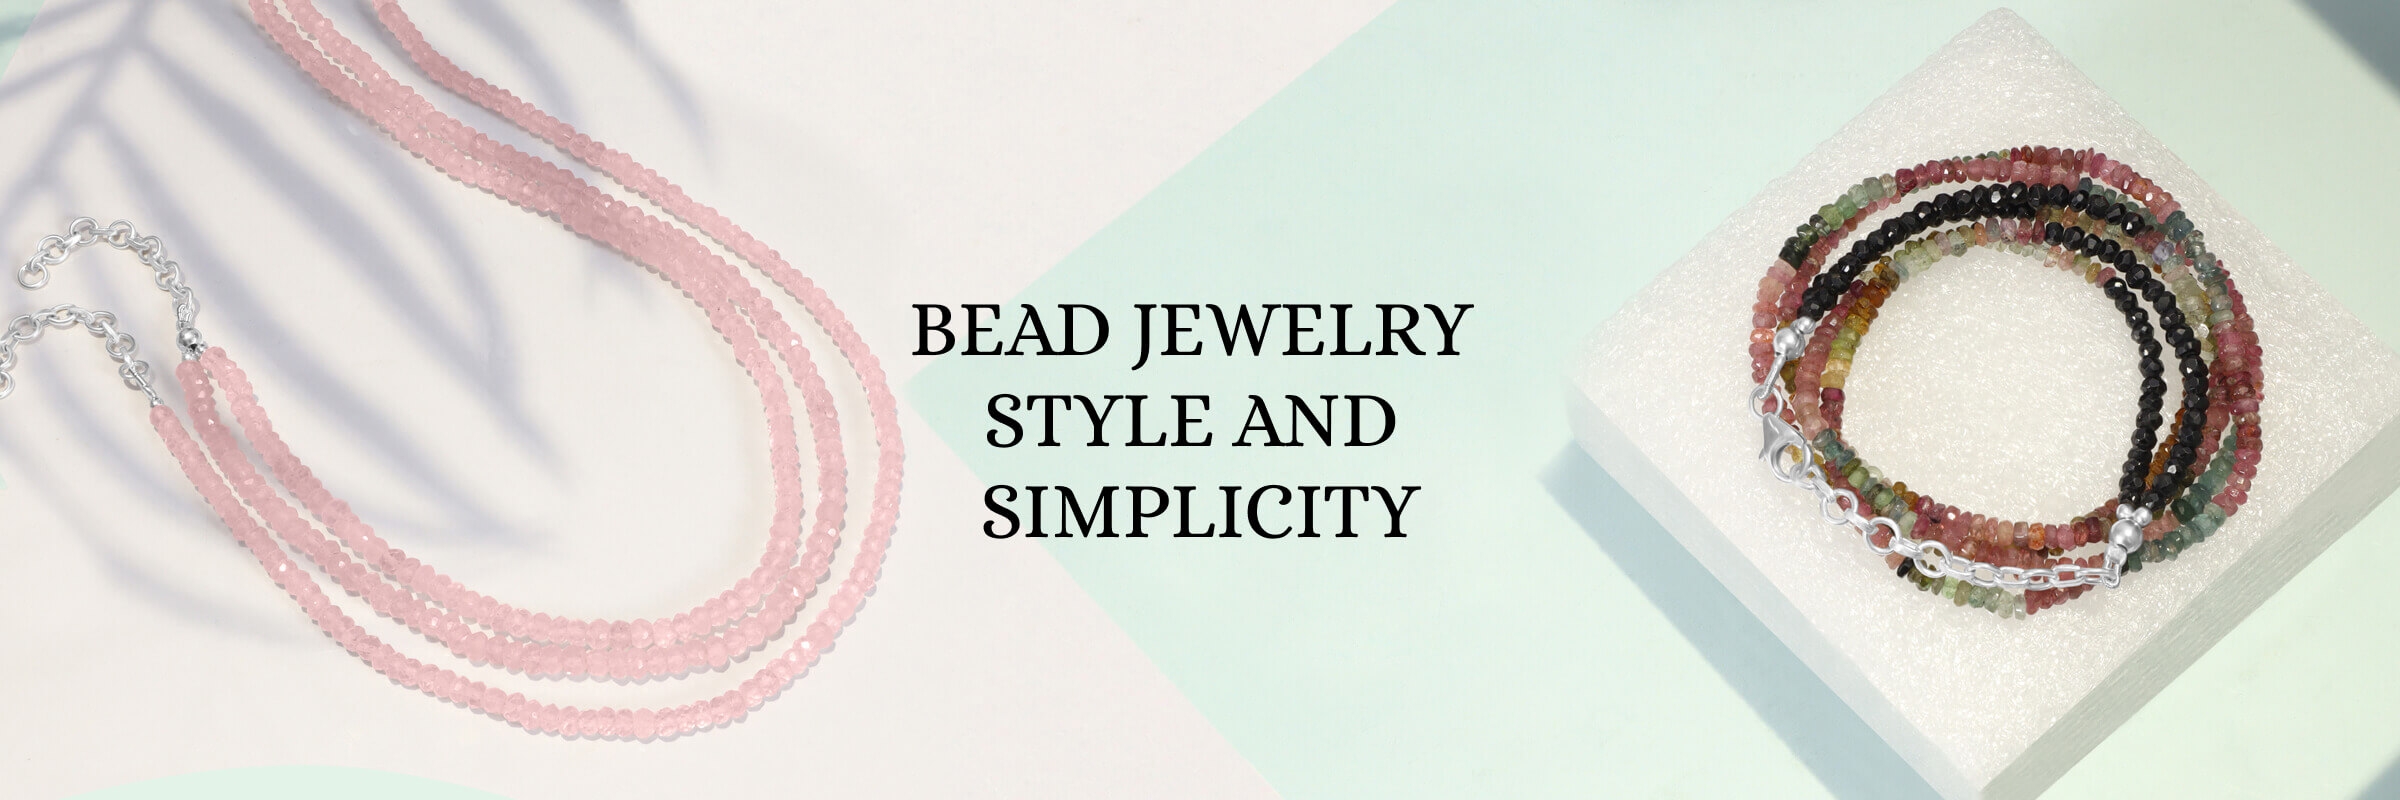 Captivating Styles of Gemstone Beads Jewelry